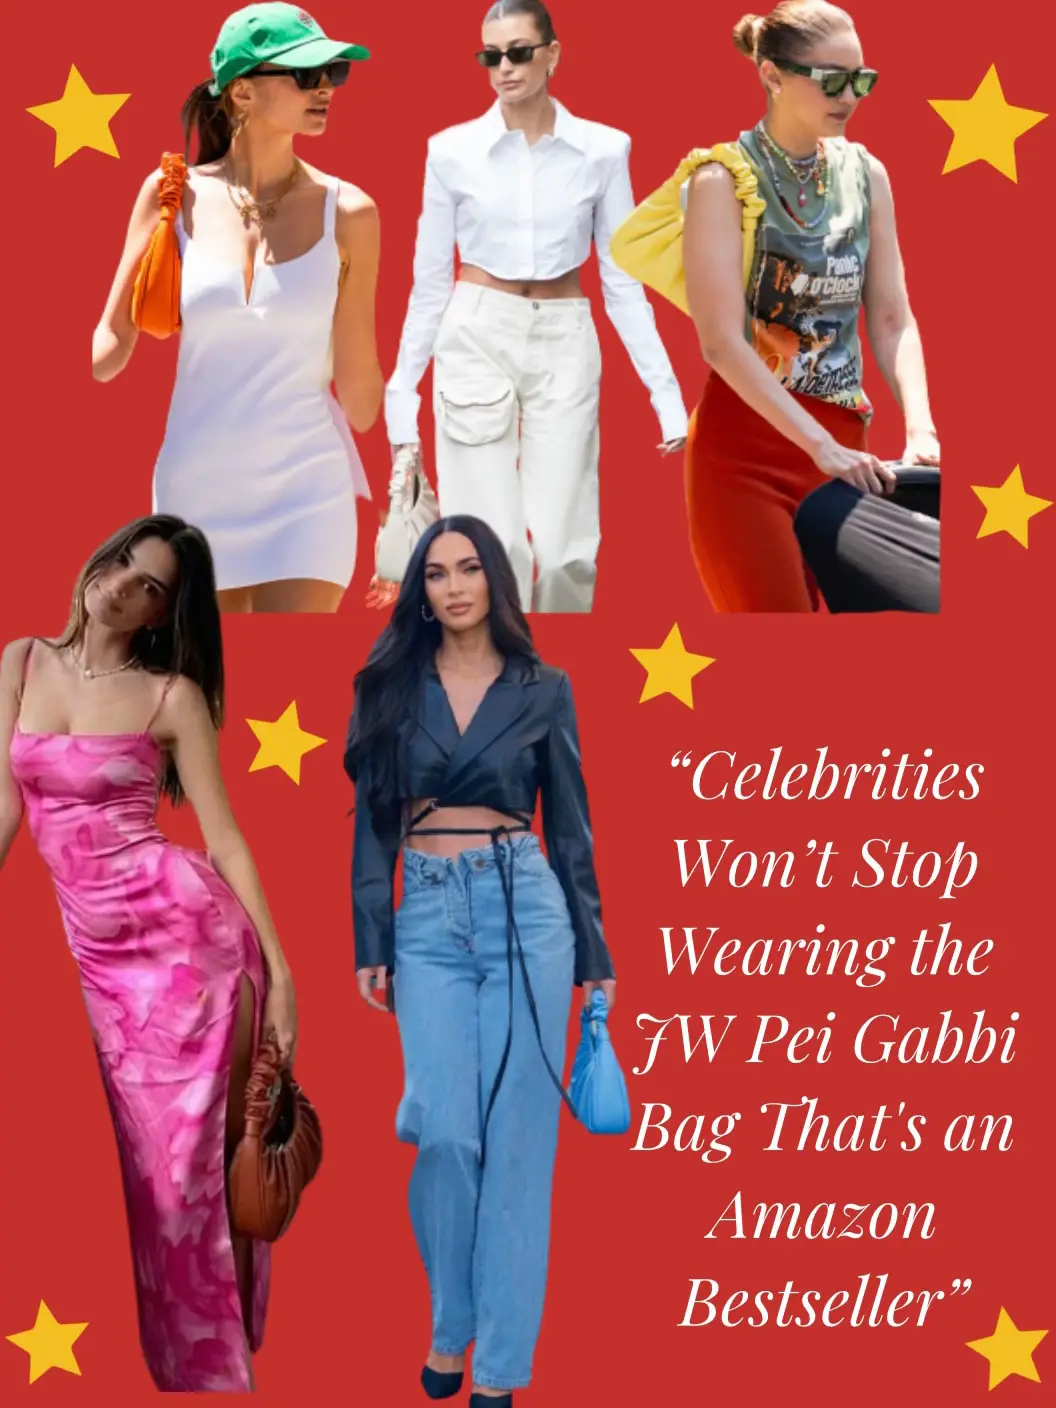 The JW Pei Gabbi Bag That Celebrities Love Is on